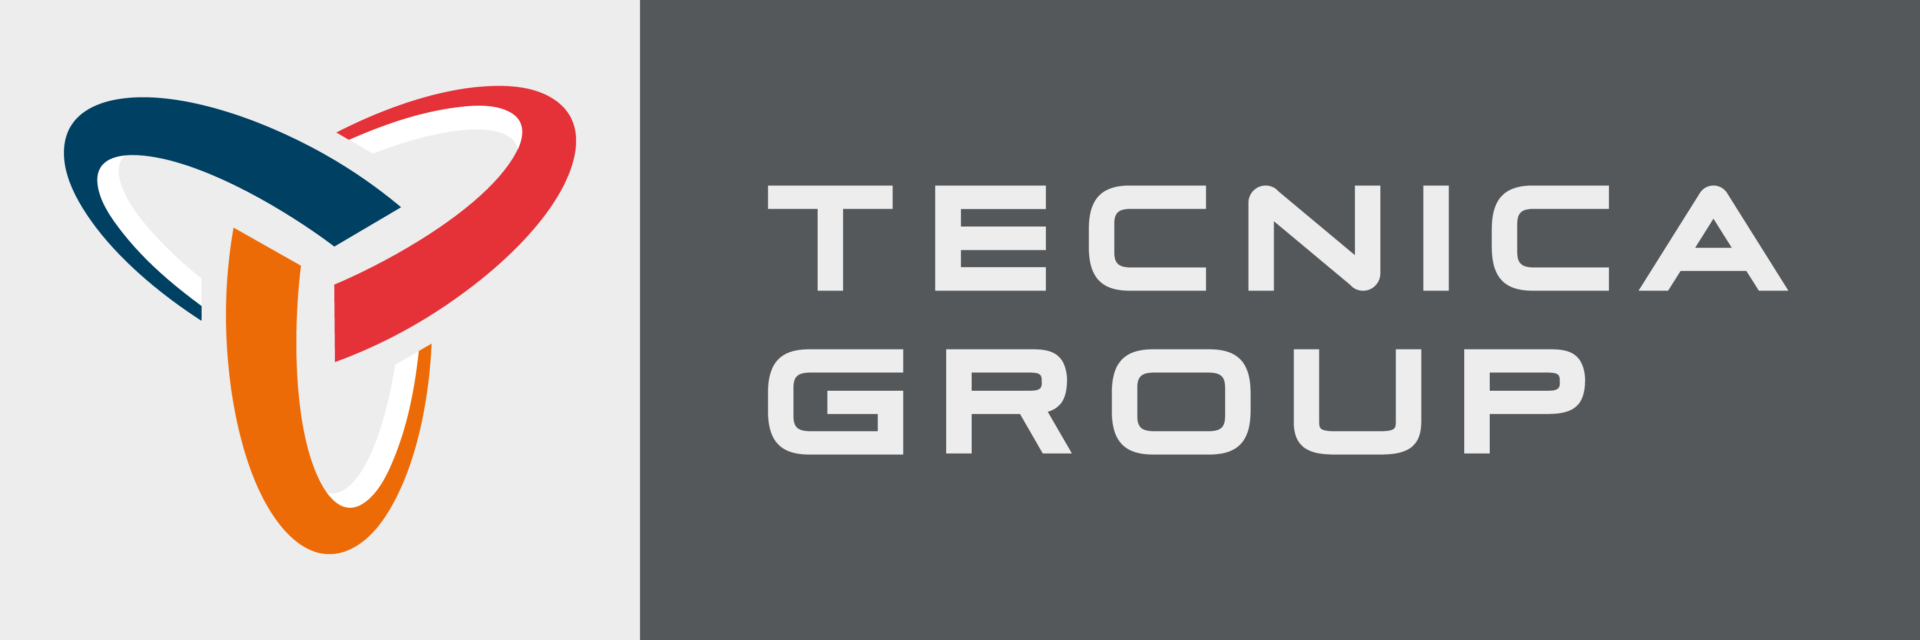 fashion-tecnica-group-logo